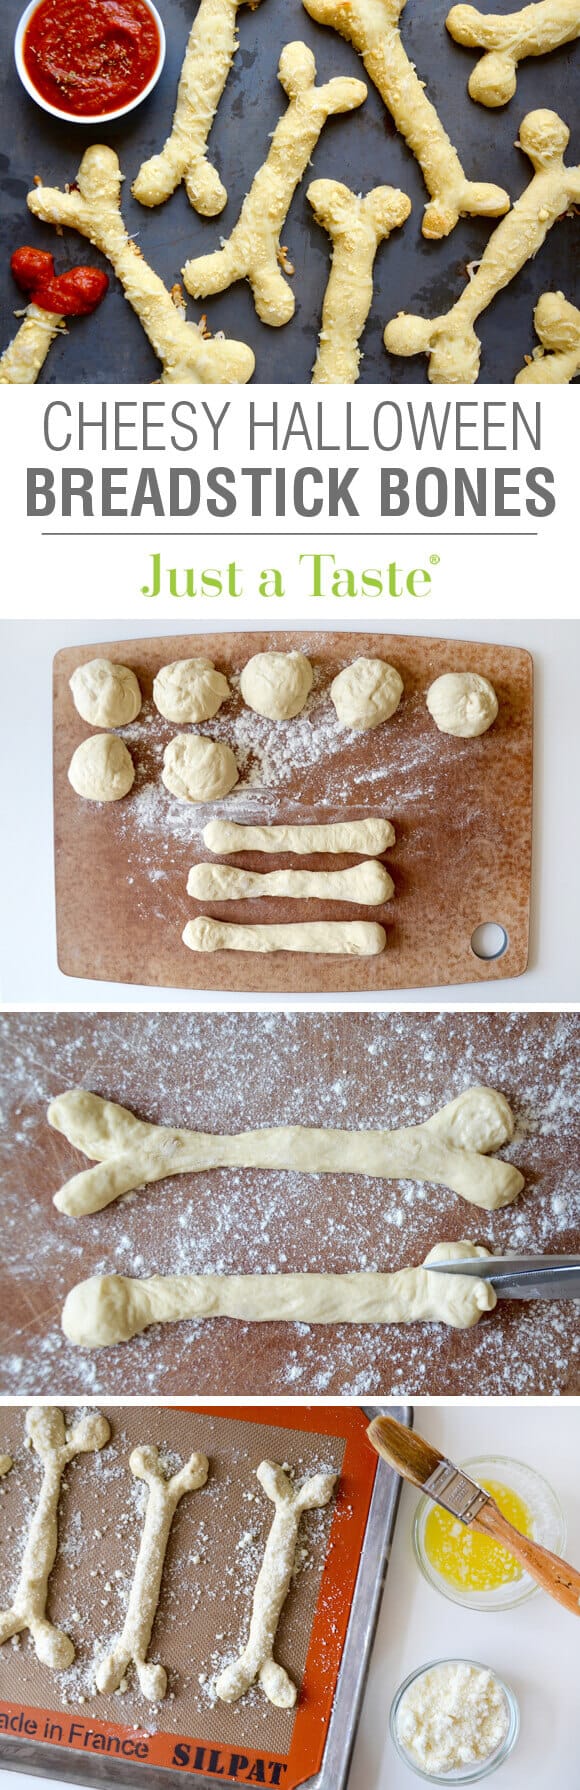 Cheesy Halloween Breadstick Bones Recipe